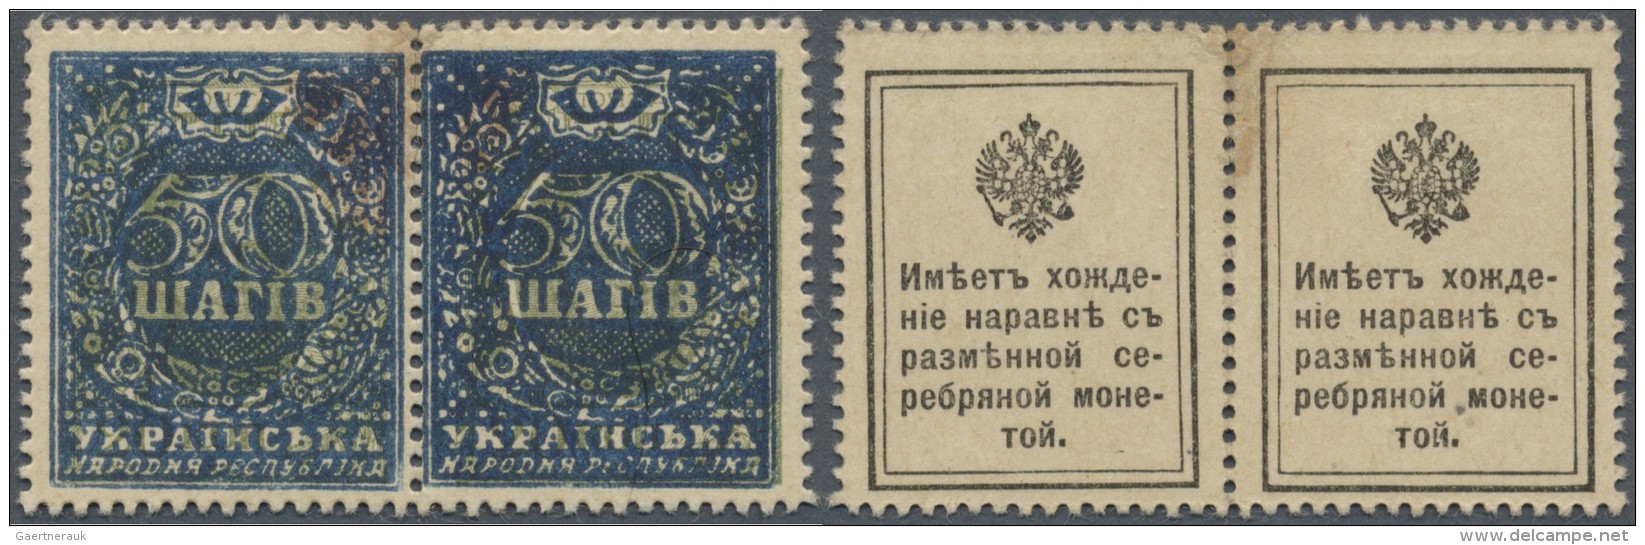 Ukraina / Ukraine: Highly Rare Block Pair Of 50 Shahiv ND(1918) Postage Stamp Currency With Blue Overprint 50 Shahiv On - Ukraine